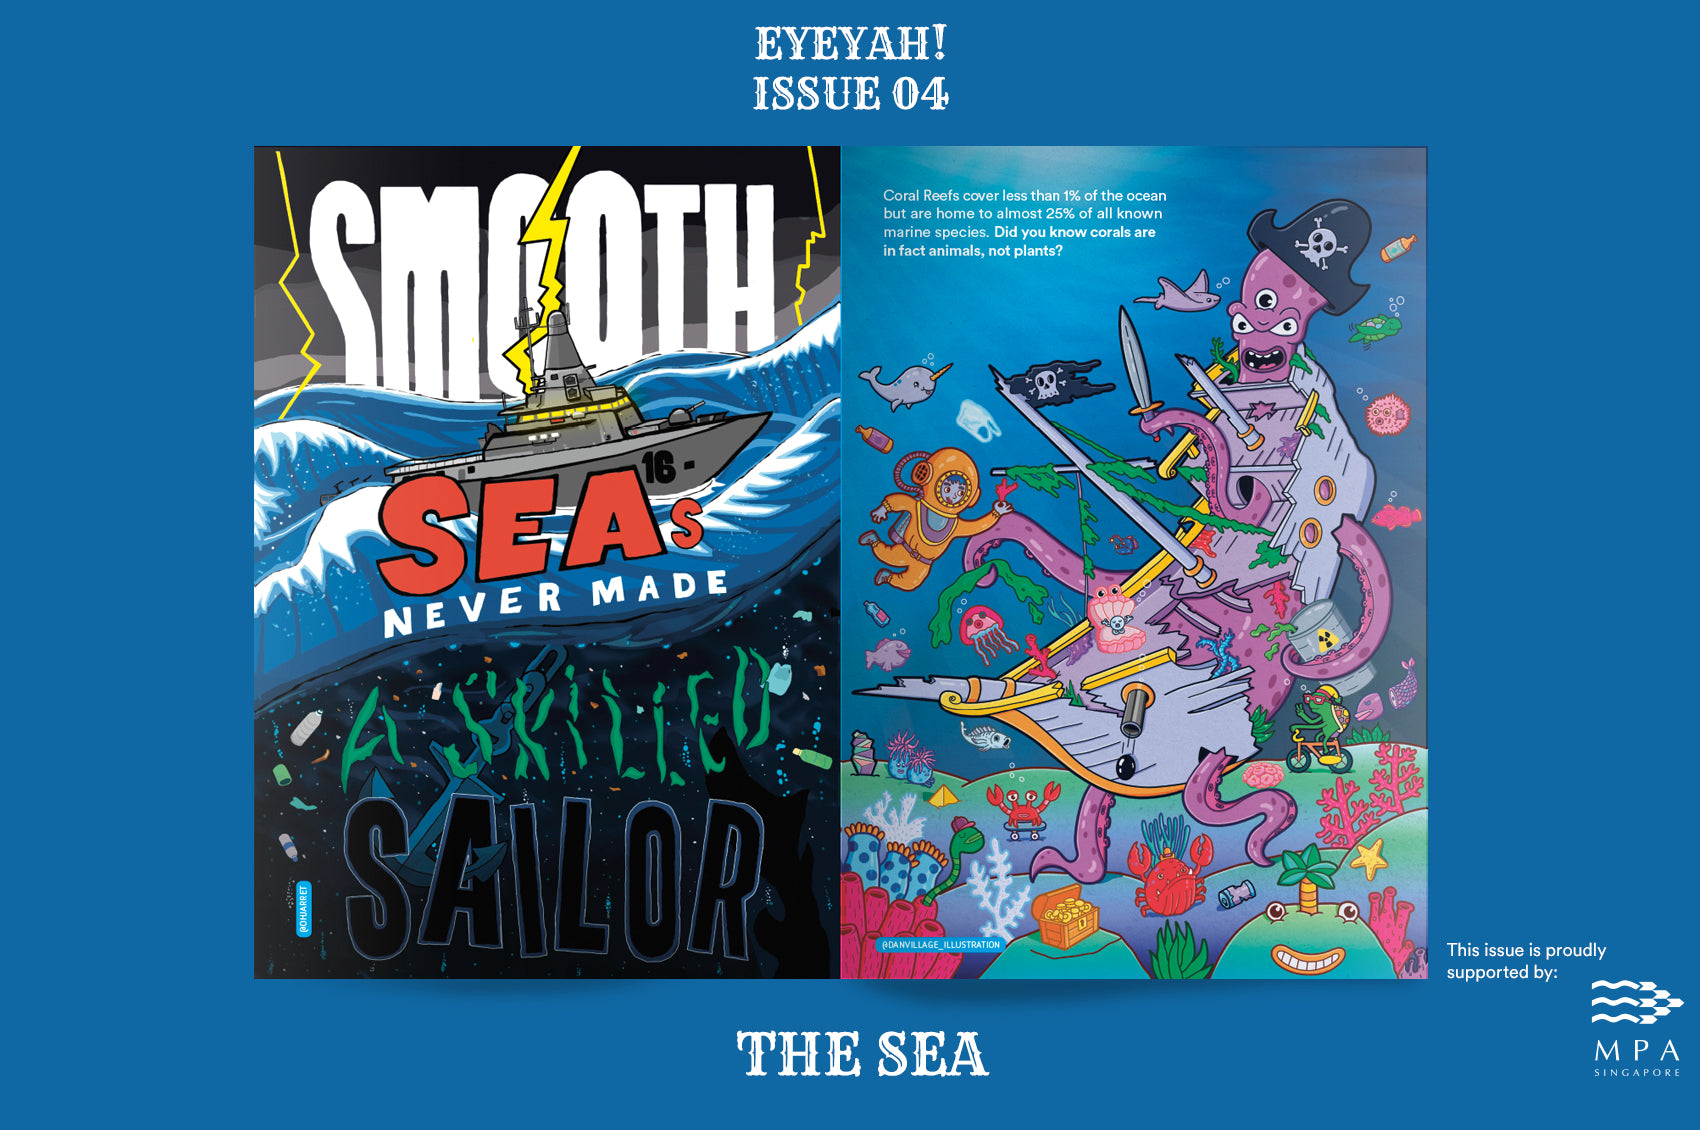 EYEYAH! Issue 03 - The SEA